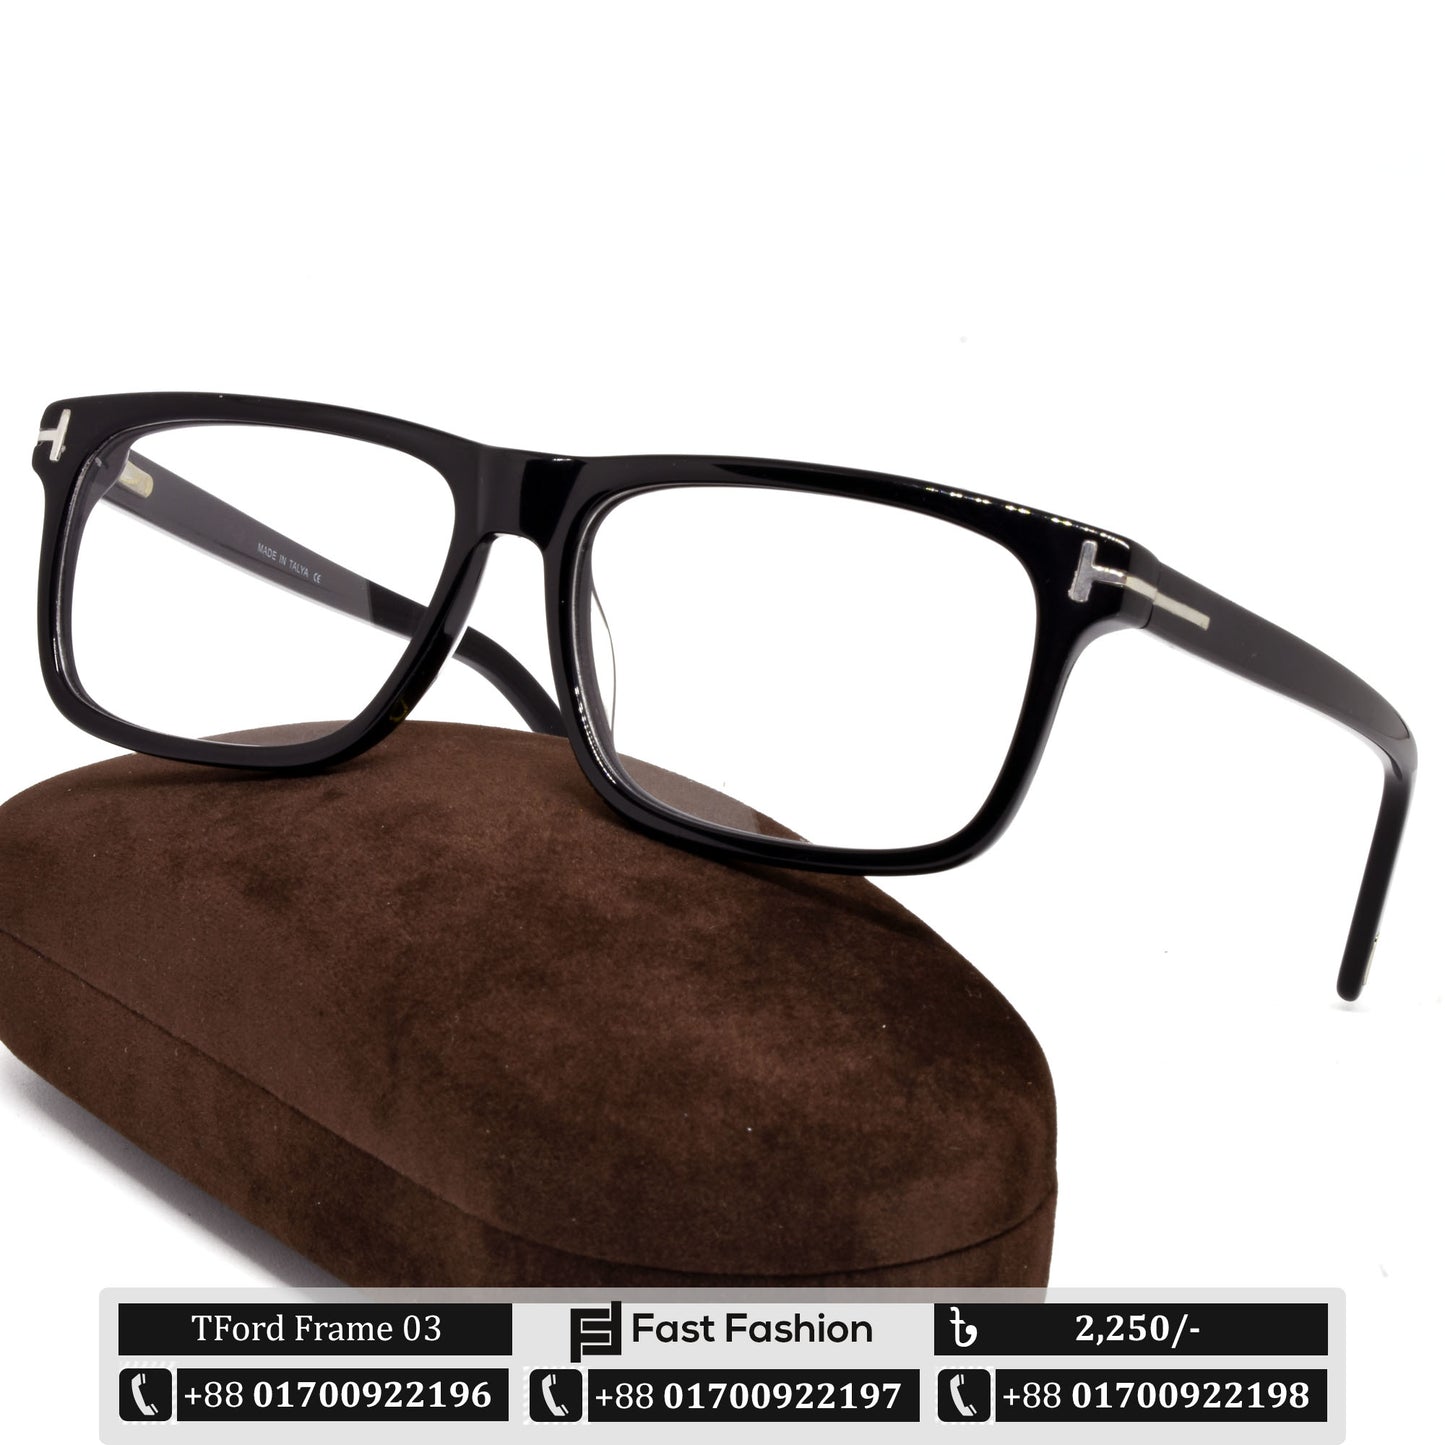 Trendy Stylish Optic Frame | TFord Frame 03 | Premium Quality